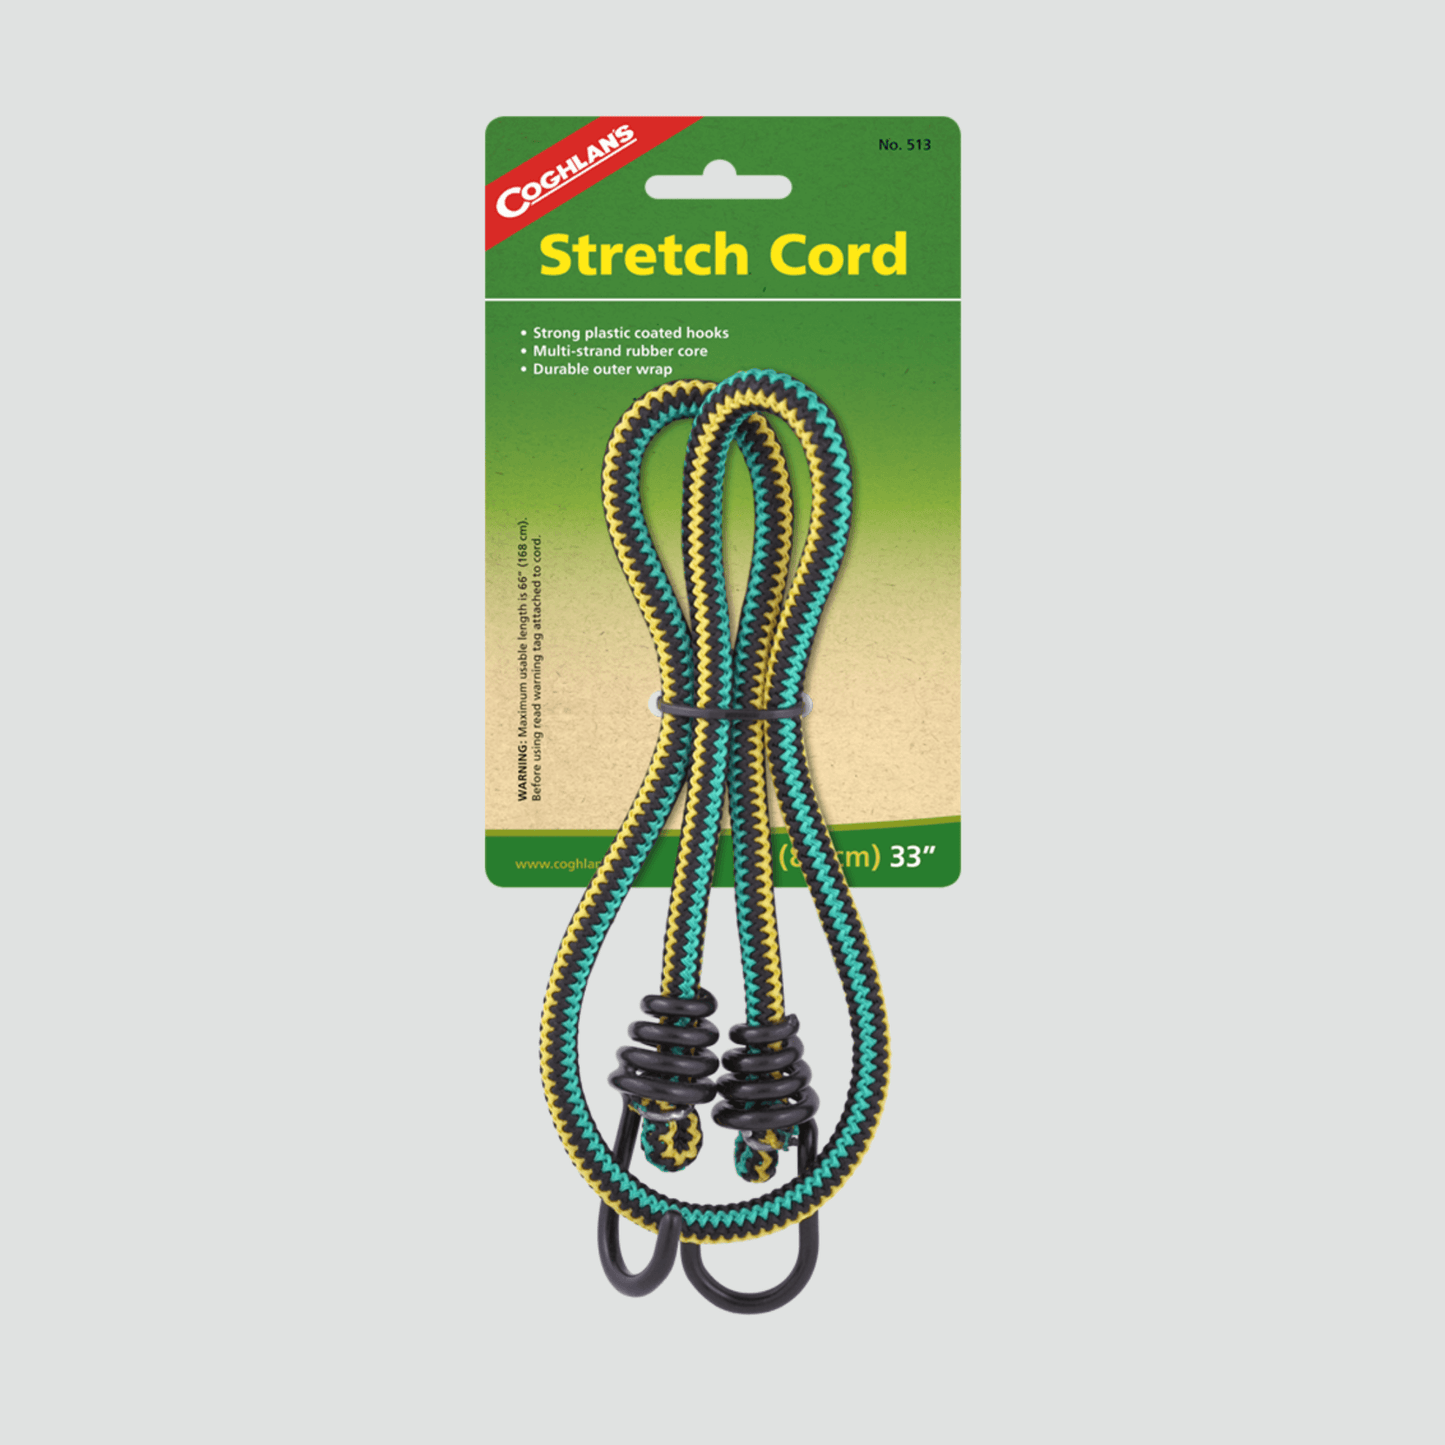 one 33" Stretch Cord